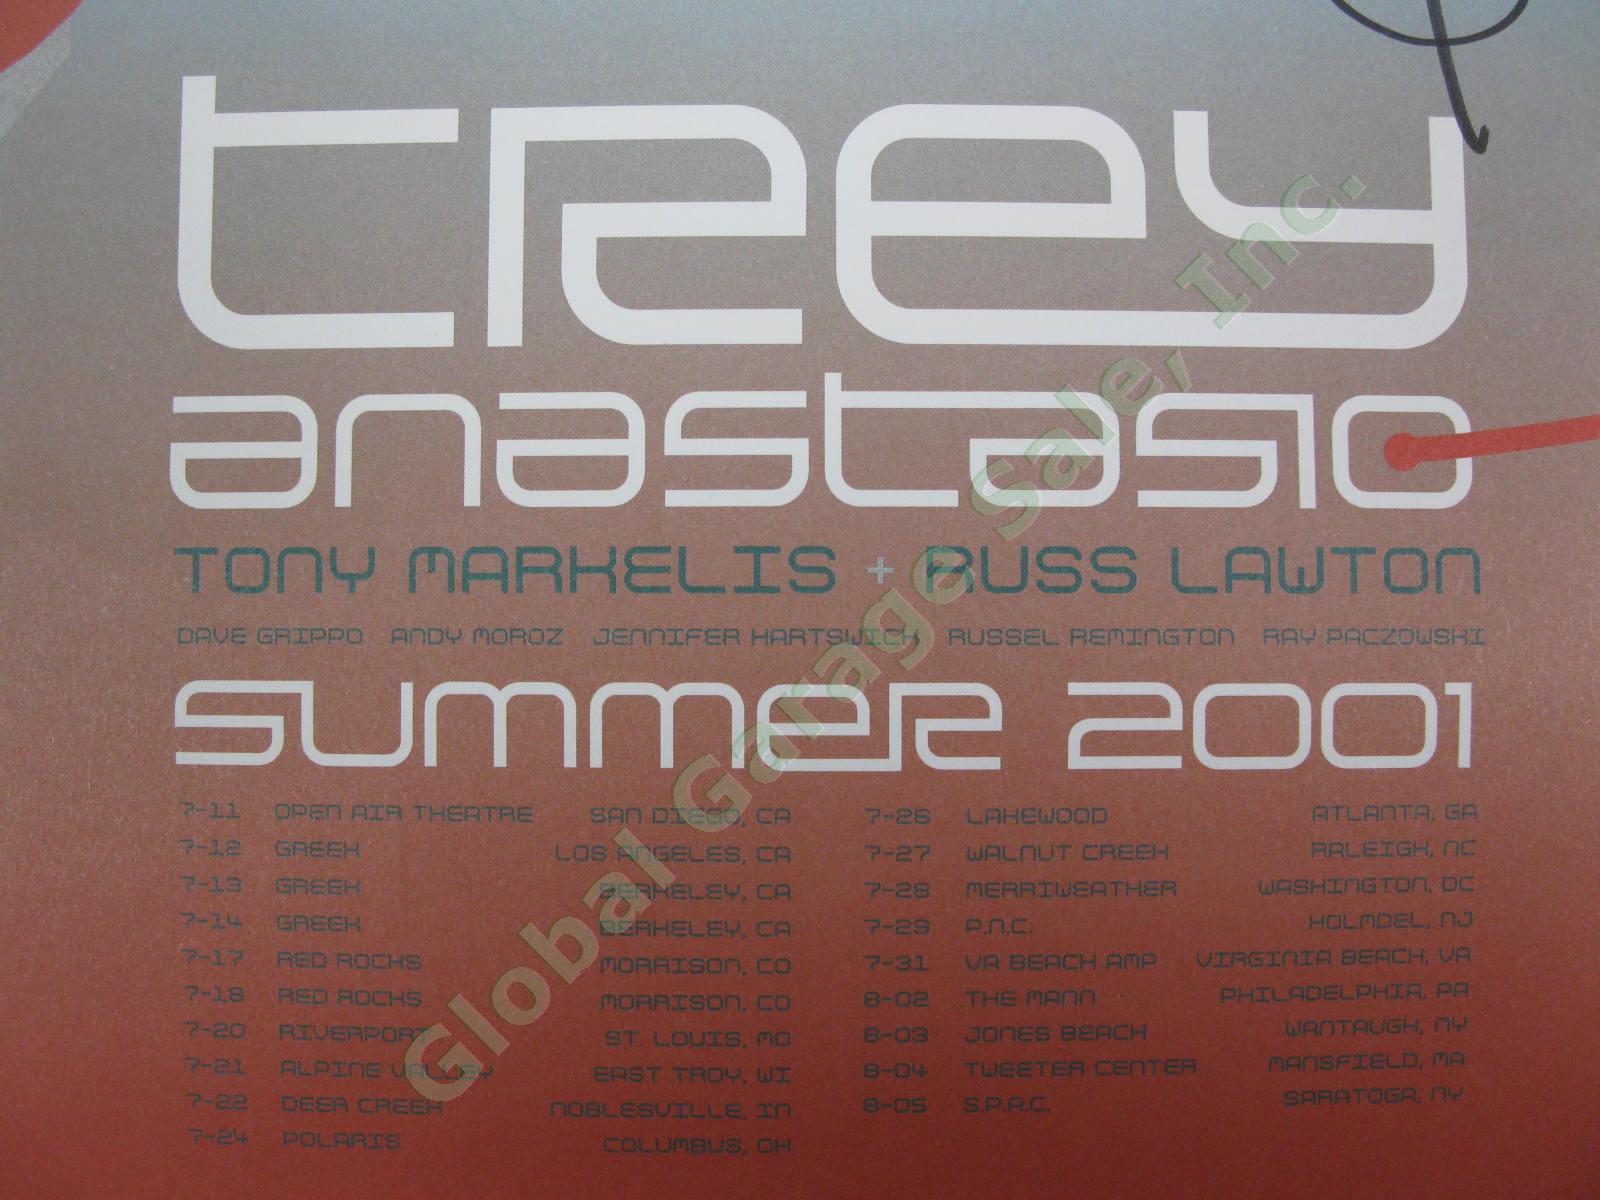 1st Edition 2001 TREY ANASTASIO BAND SIGNED TAB Silhouette Poster PHISH Error 4